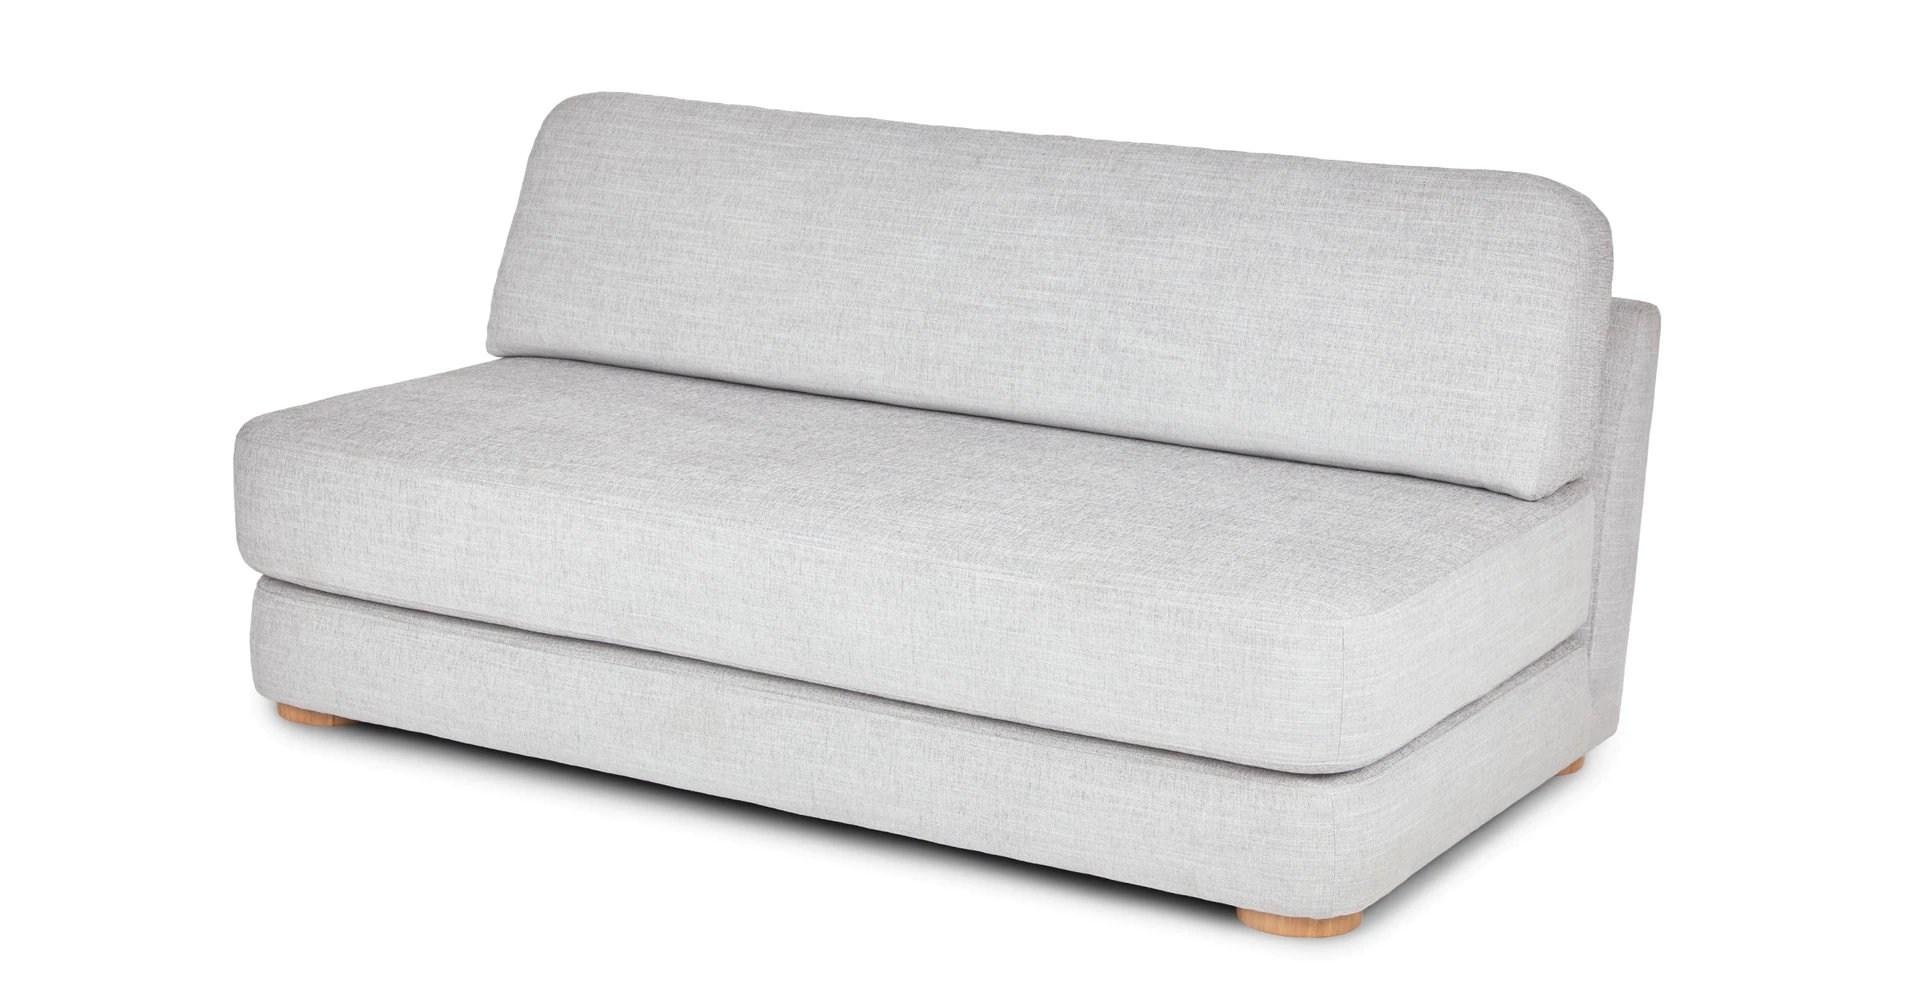 Simplis Froth Gray Sofa - Image 1